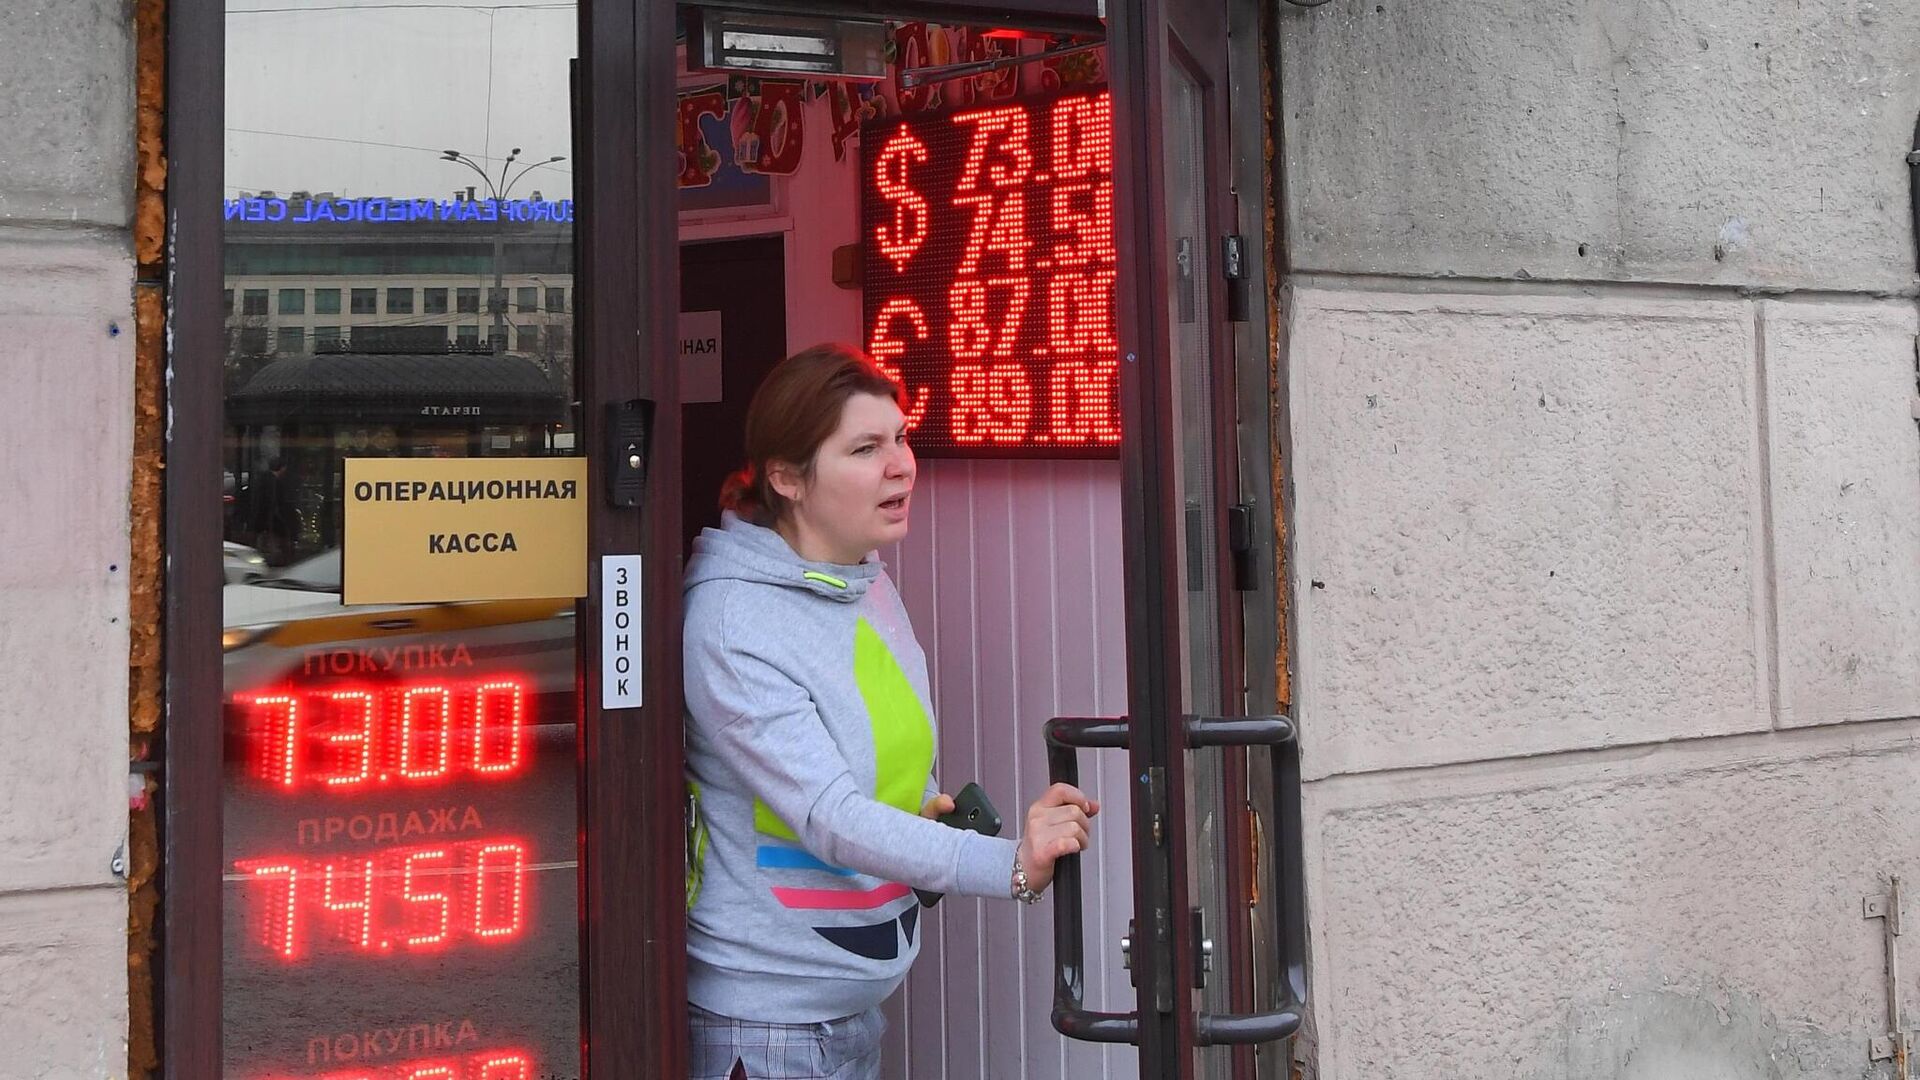 Информация с курсами валют на двери магазина в Москве - РИА Новости, 1920, 18.05.2021